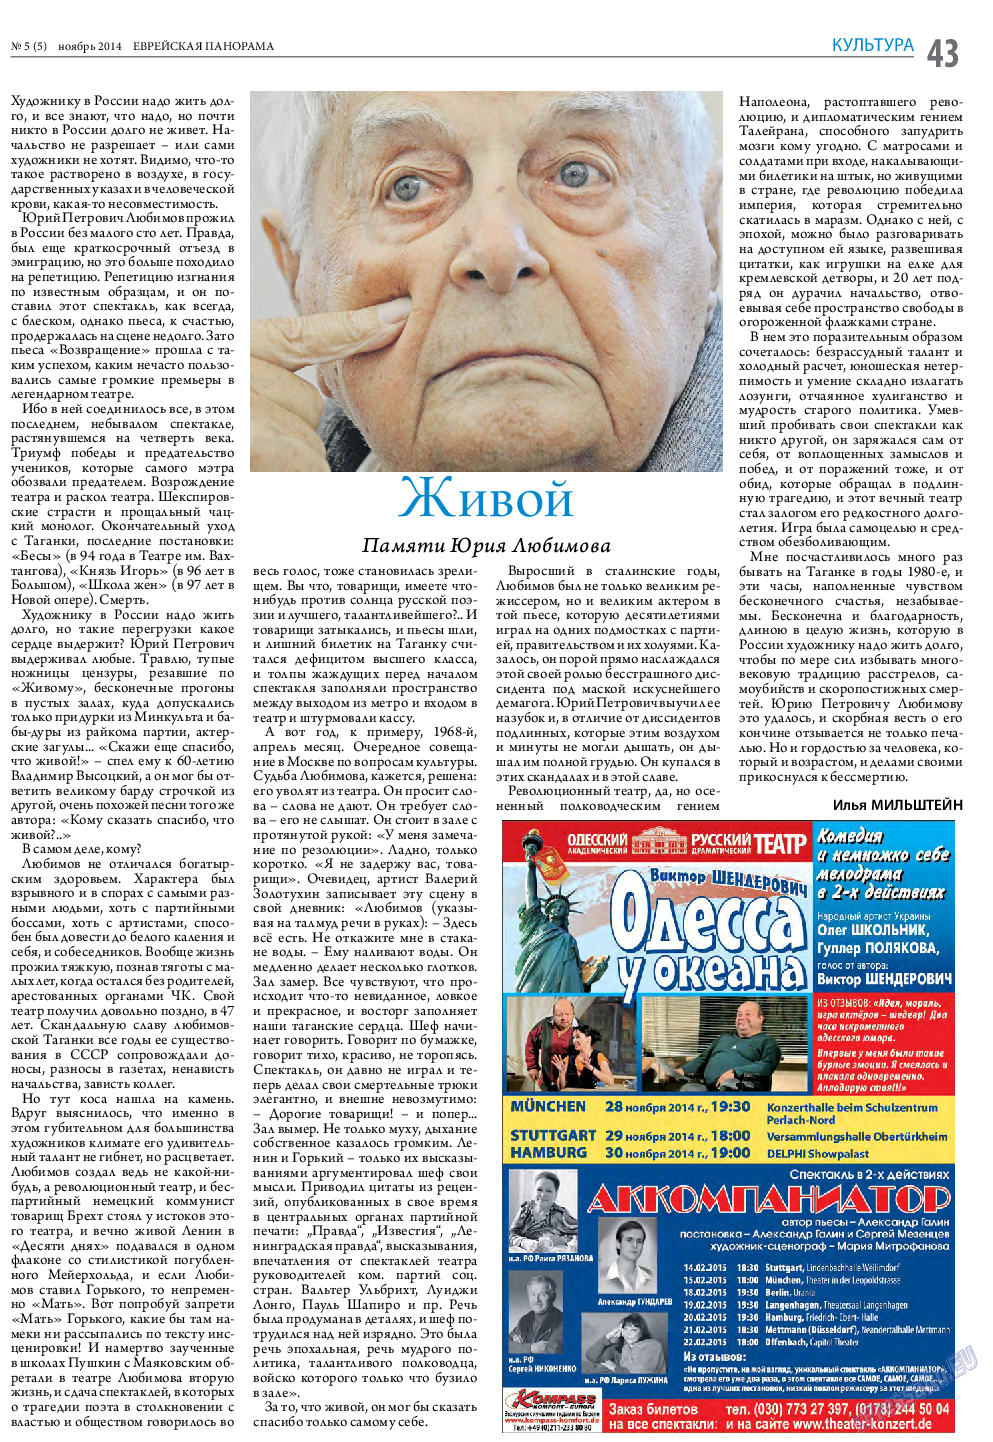 Еврейская панорама, газета. 2014 №5 стр.43